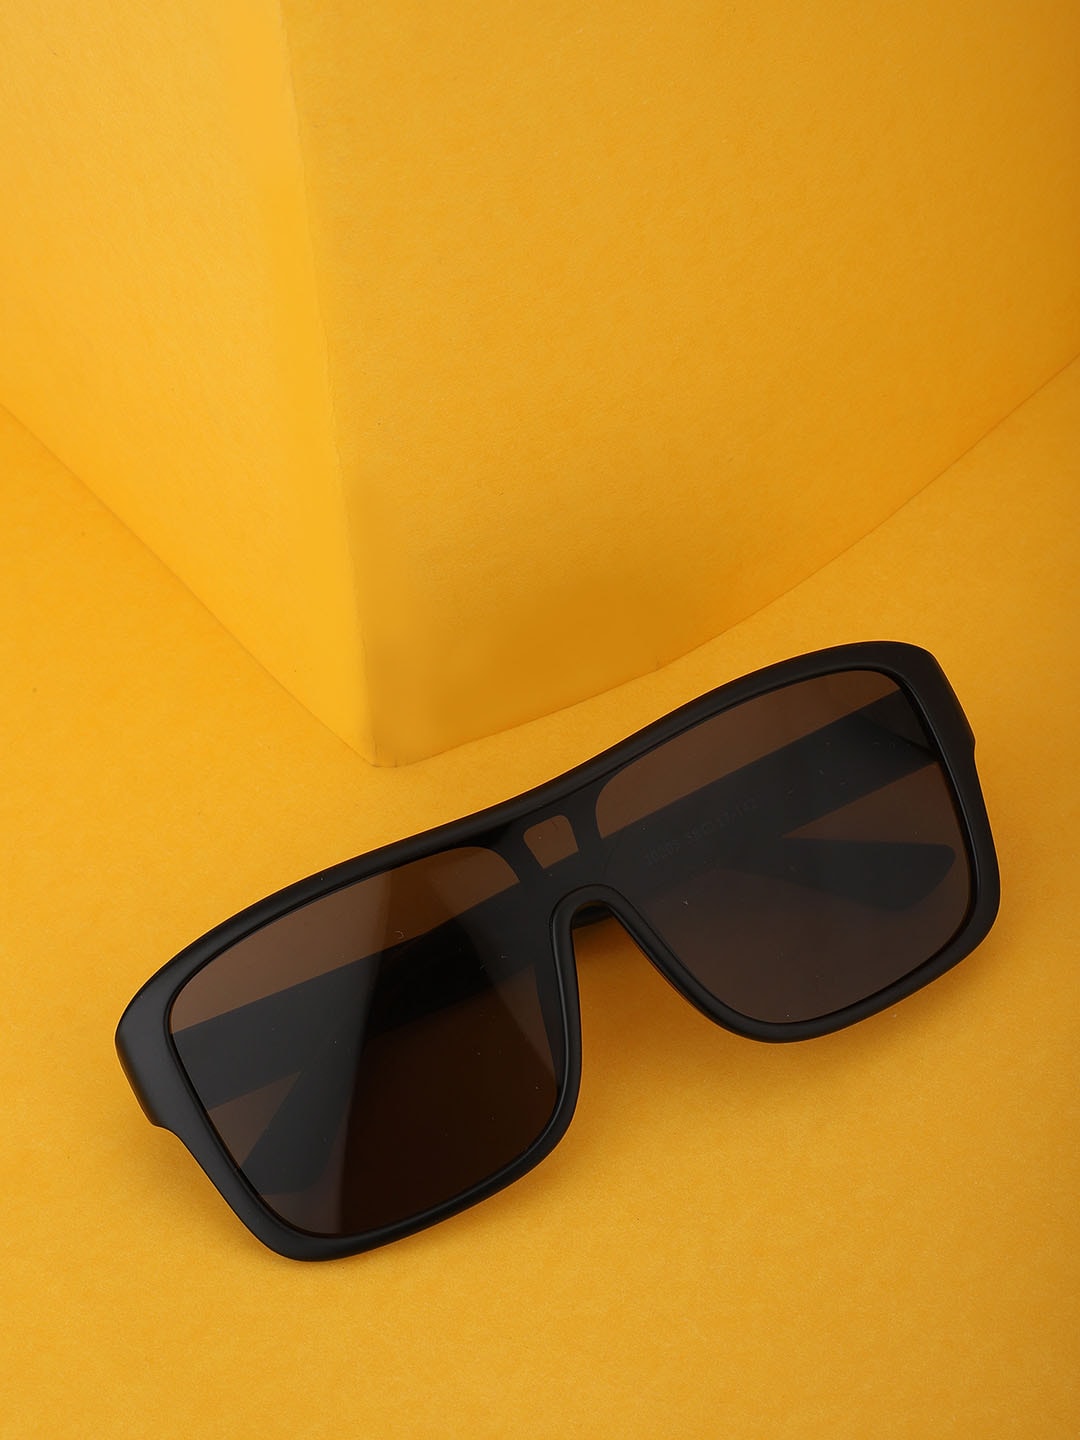 Carlton London Women Grey Lens & Black Shield Sunglasses Price in India